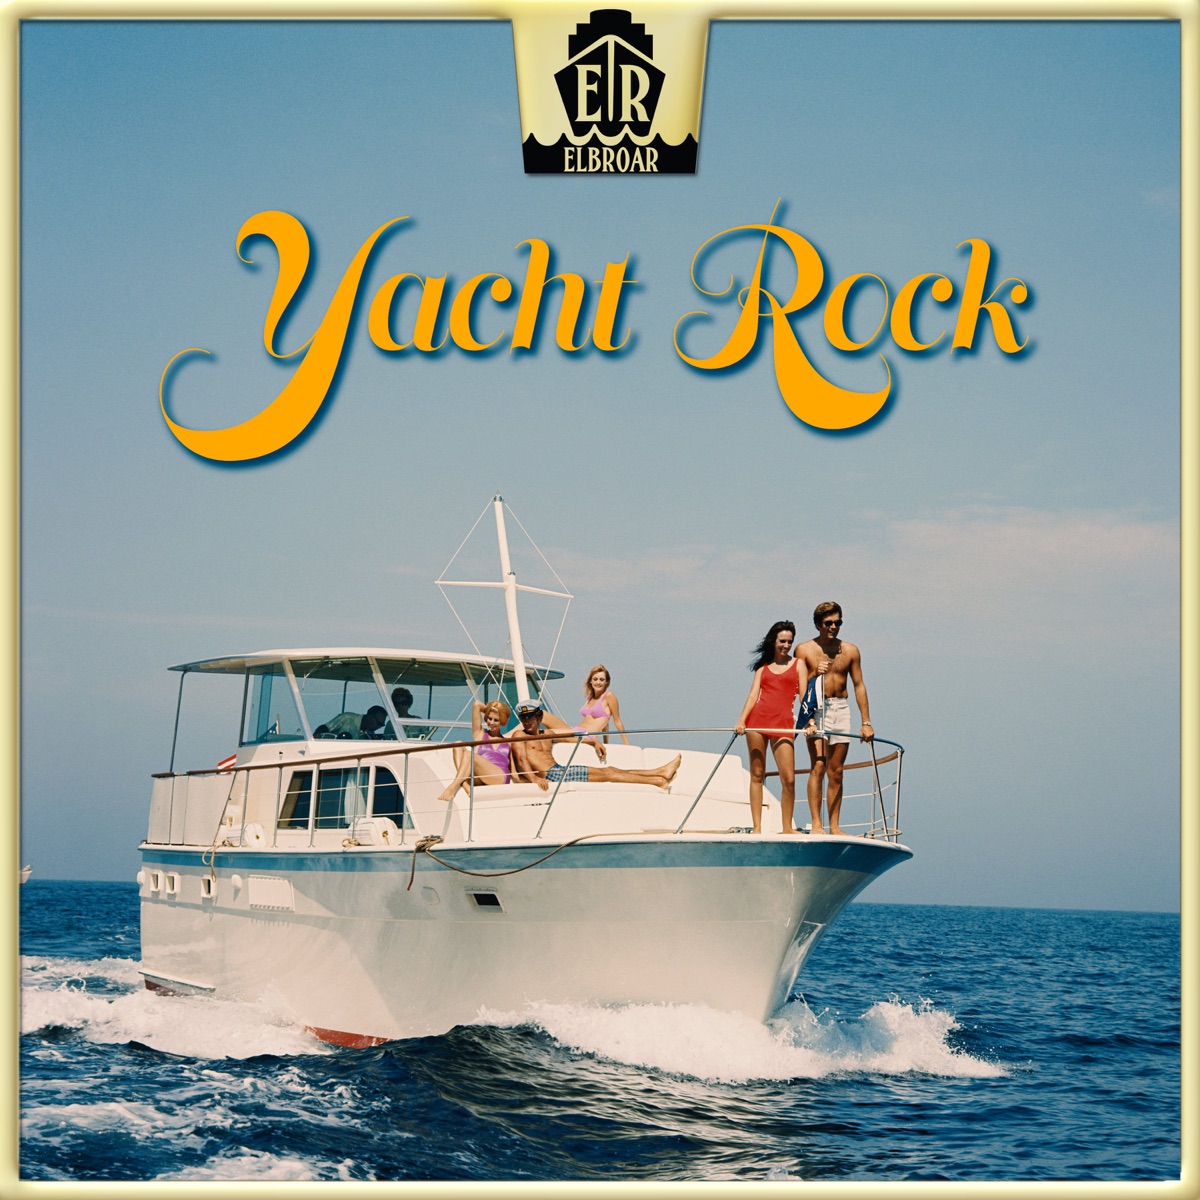 yacht rock greatest hits album